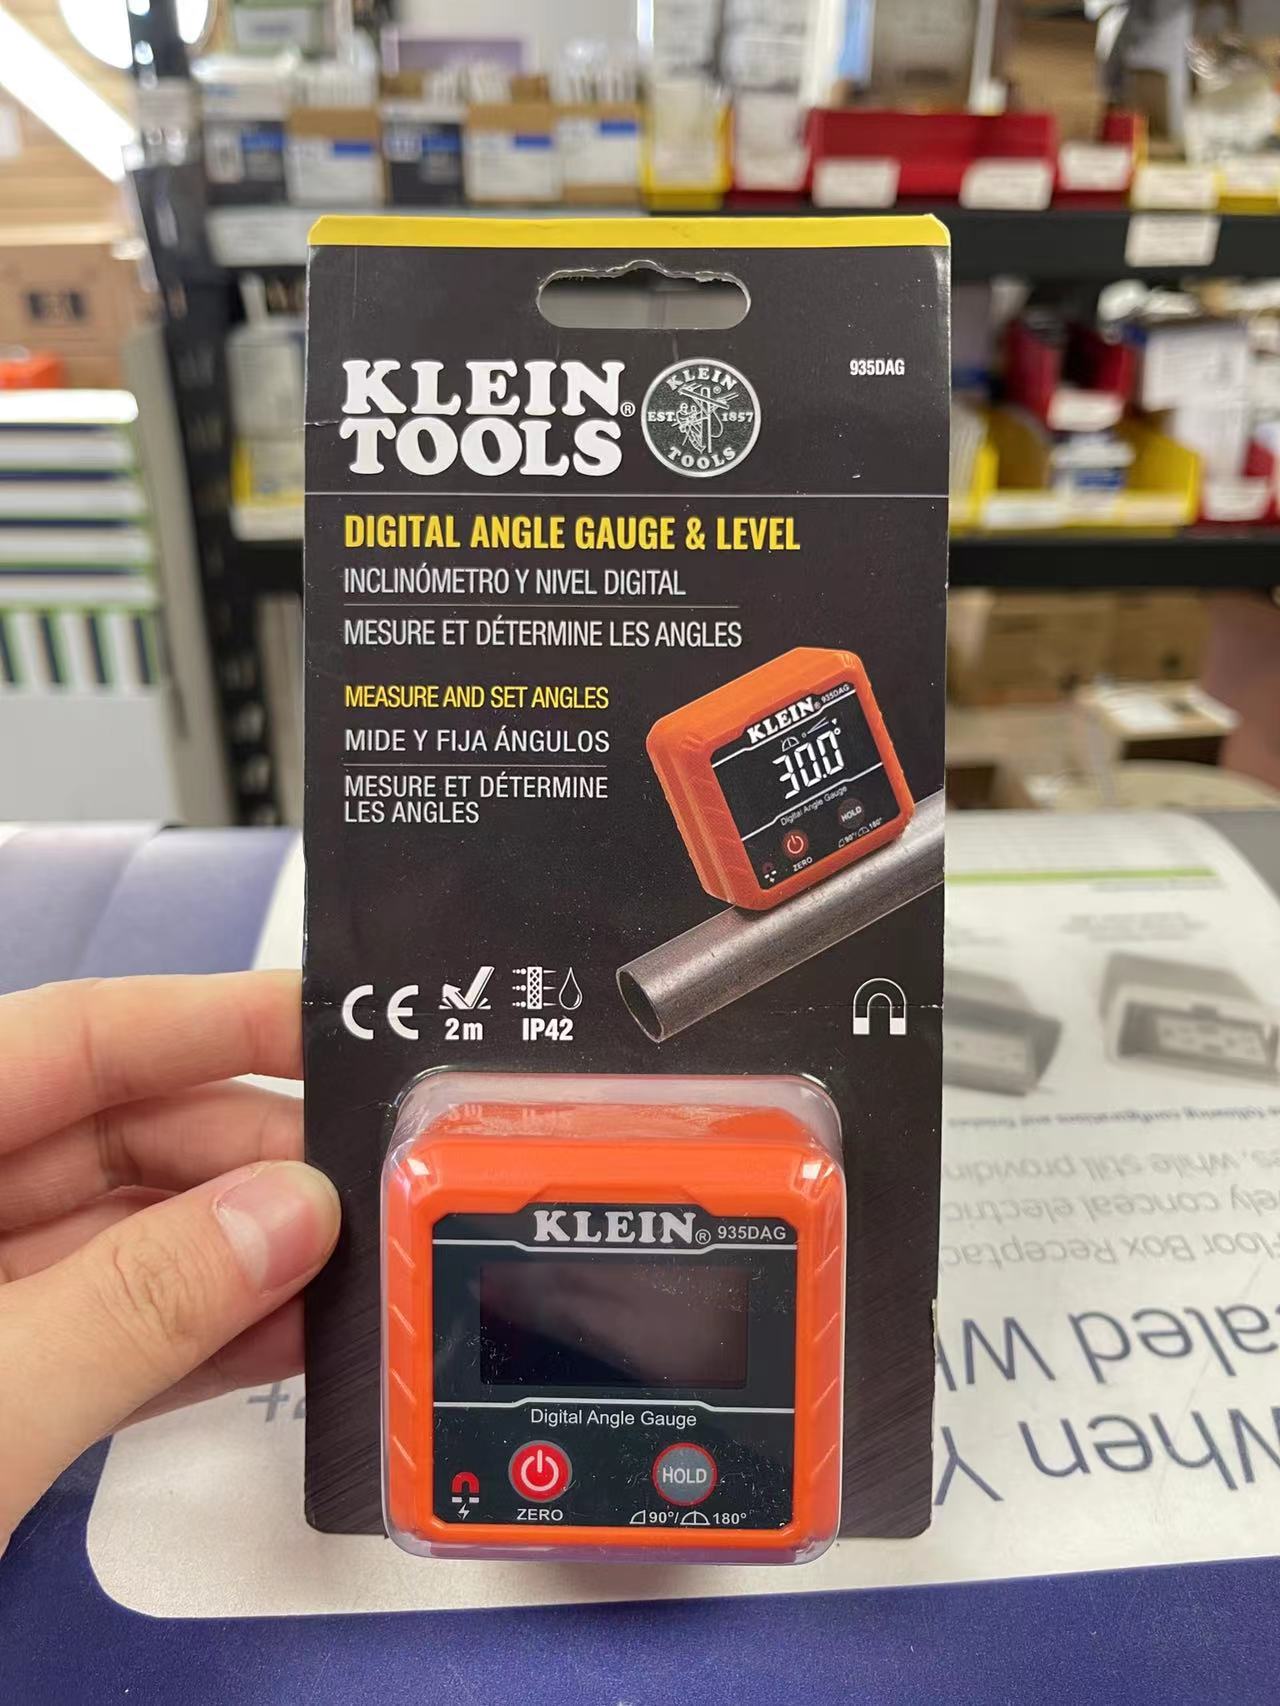 Inclinómetro y nivel digital Klein Tools 935DAG